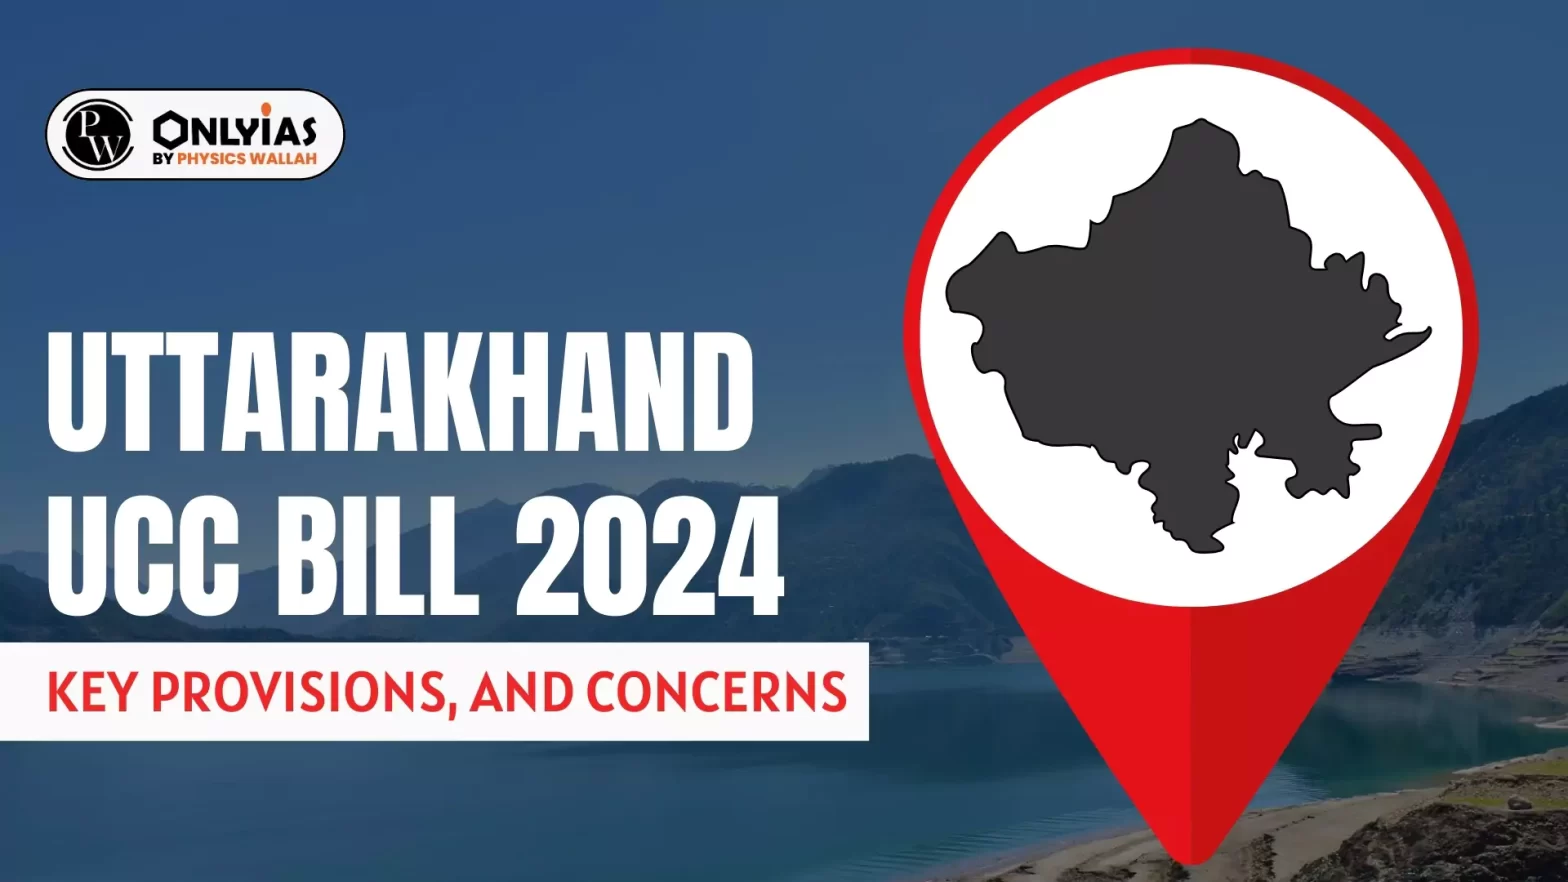 Uttarakhand UCC Bill 2024: Key Provisions, and Concerns